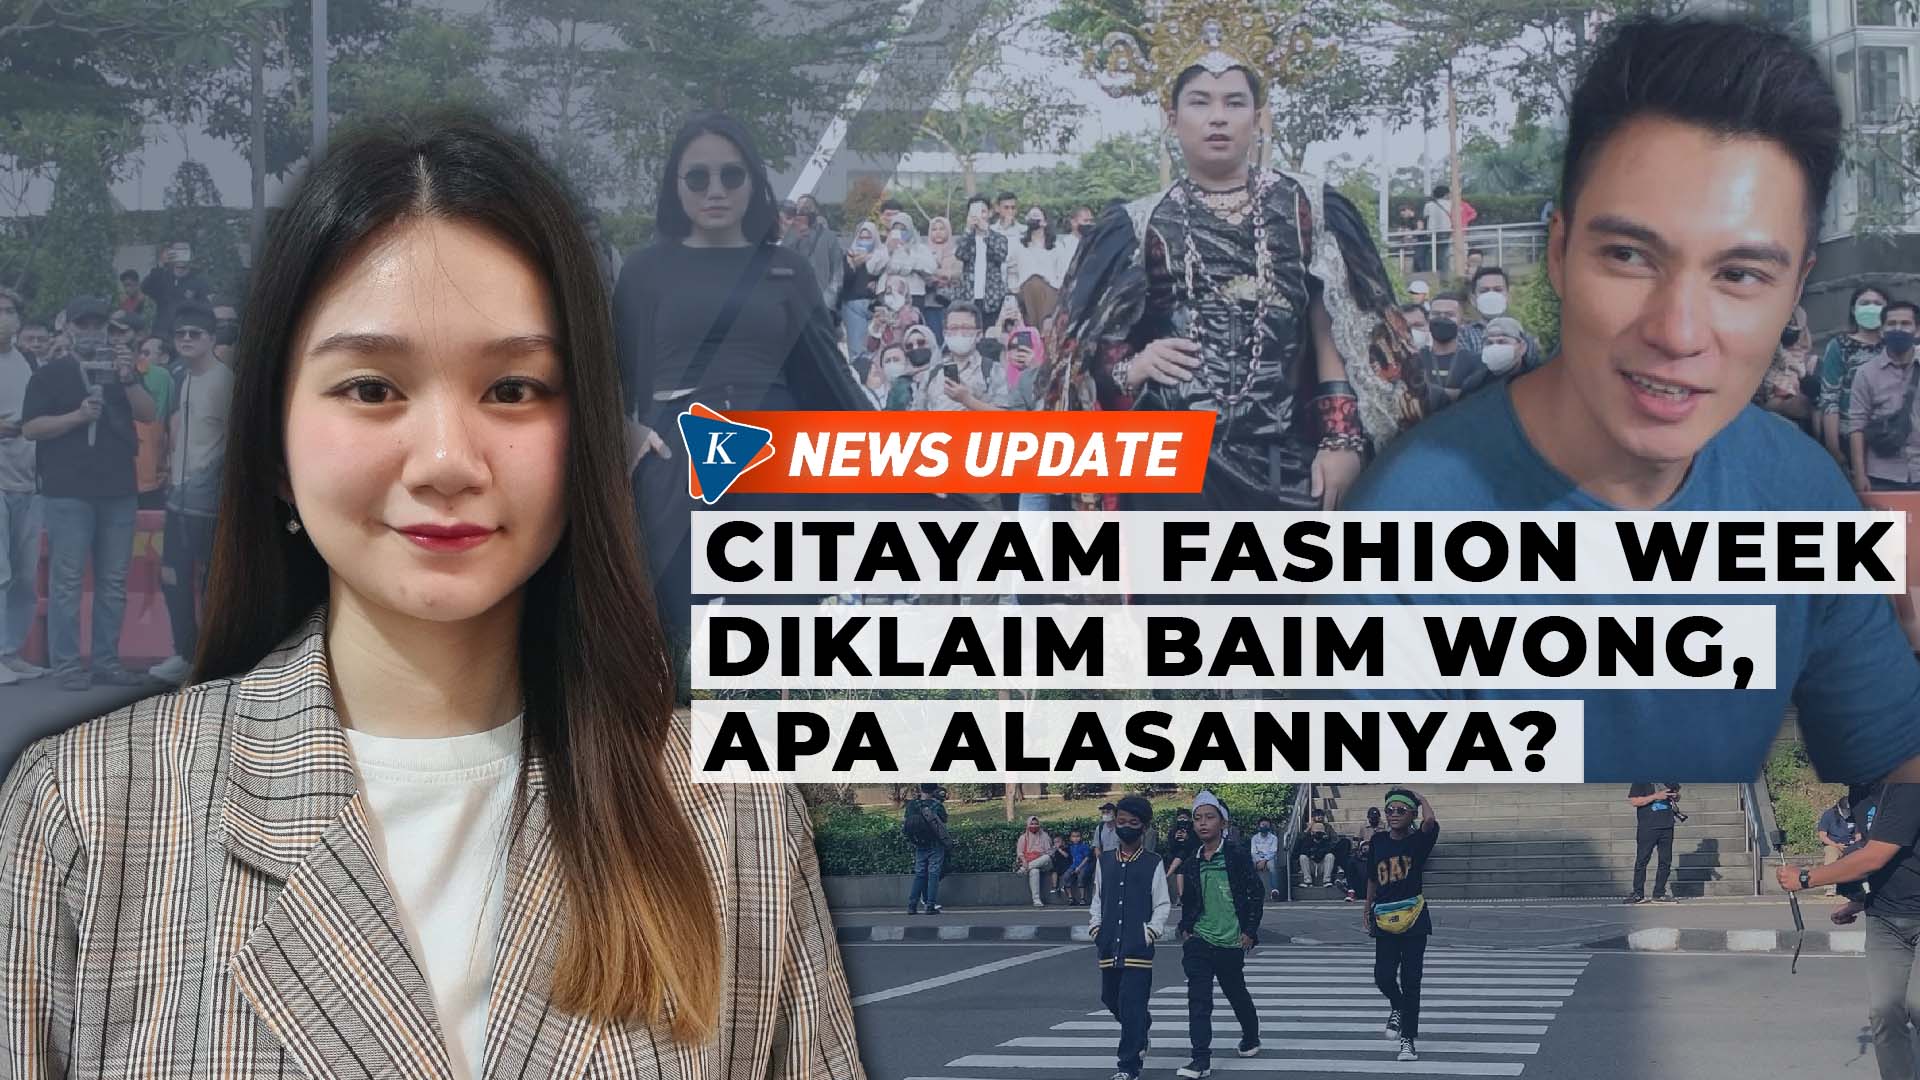 Kontroversi Baim Wong dan Indigo Daftarkan Merek Citayam Fashion Week hingga Disentil Ridwan Kamil